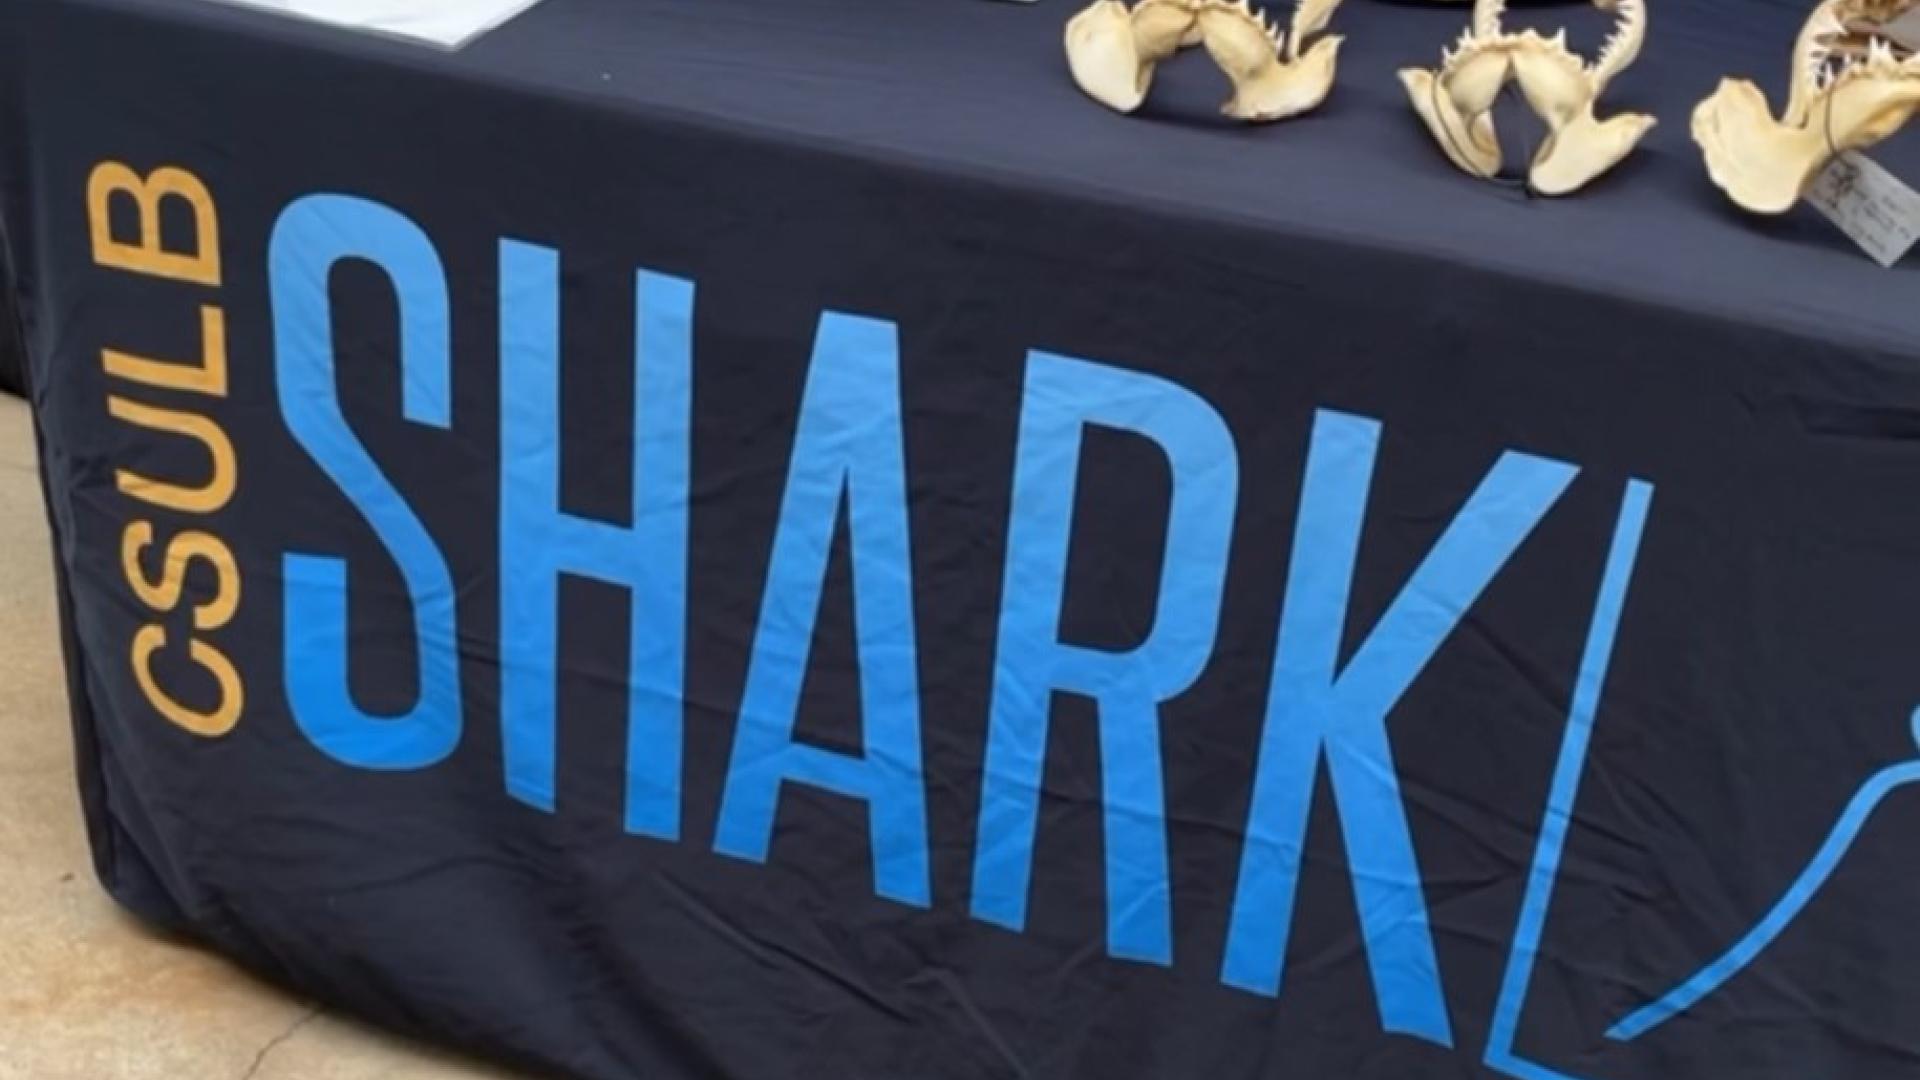 CSULB Shark Lab tabling